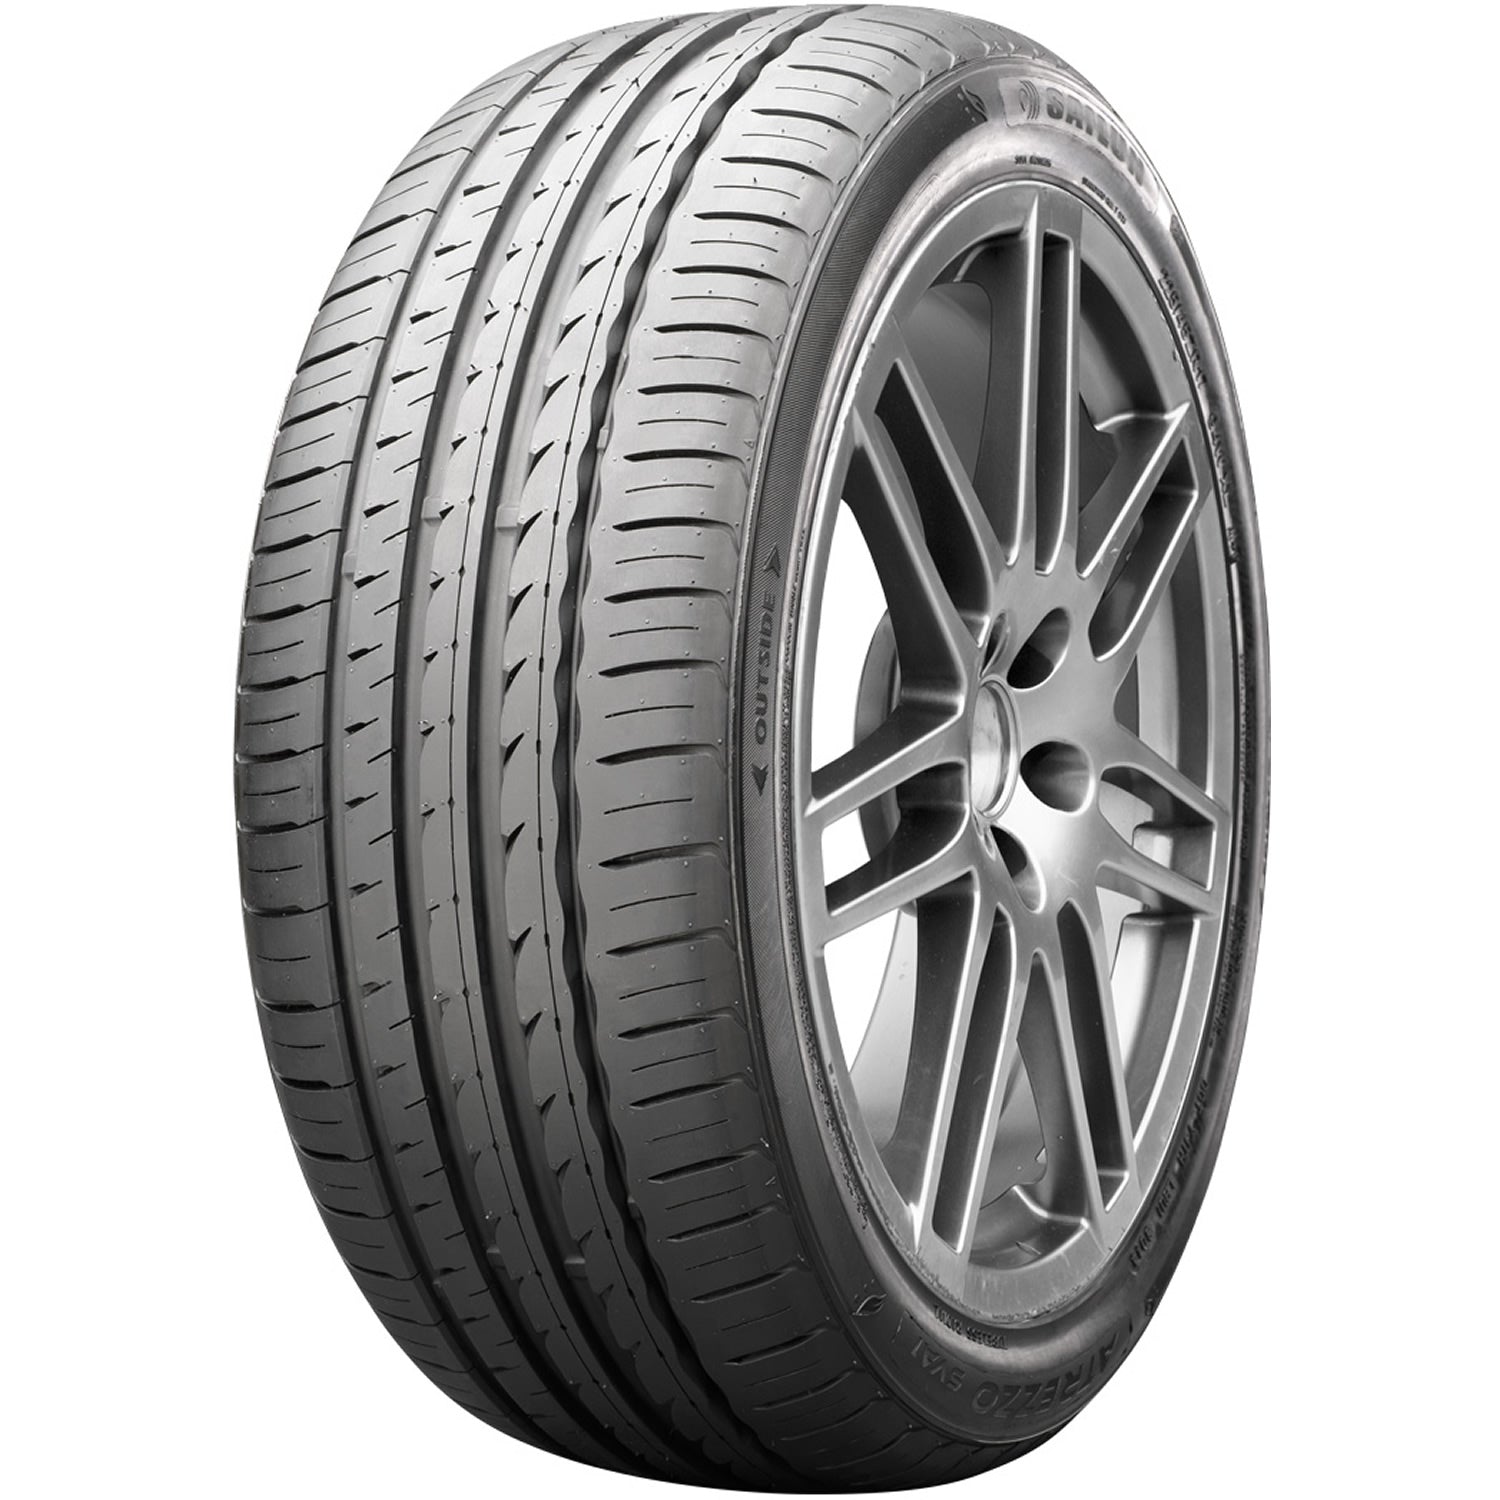 SAILUN ATREZZO SVA1 245/45R17 (25.7X9.6R 17) Tires